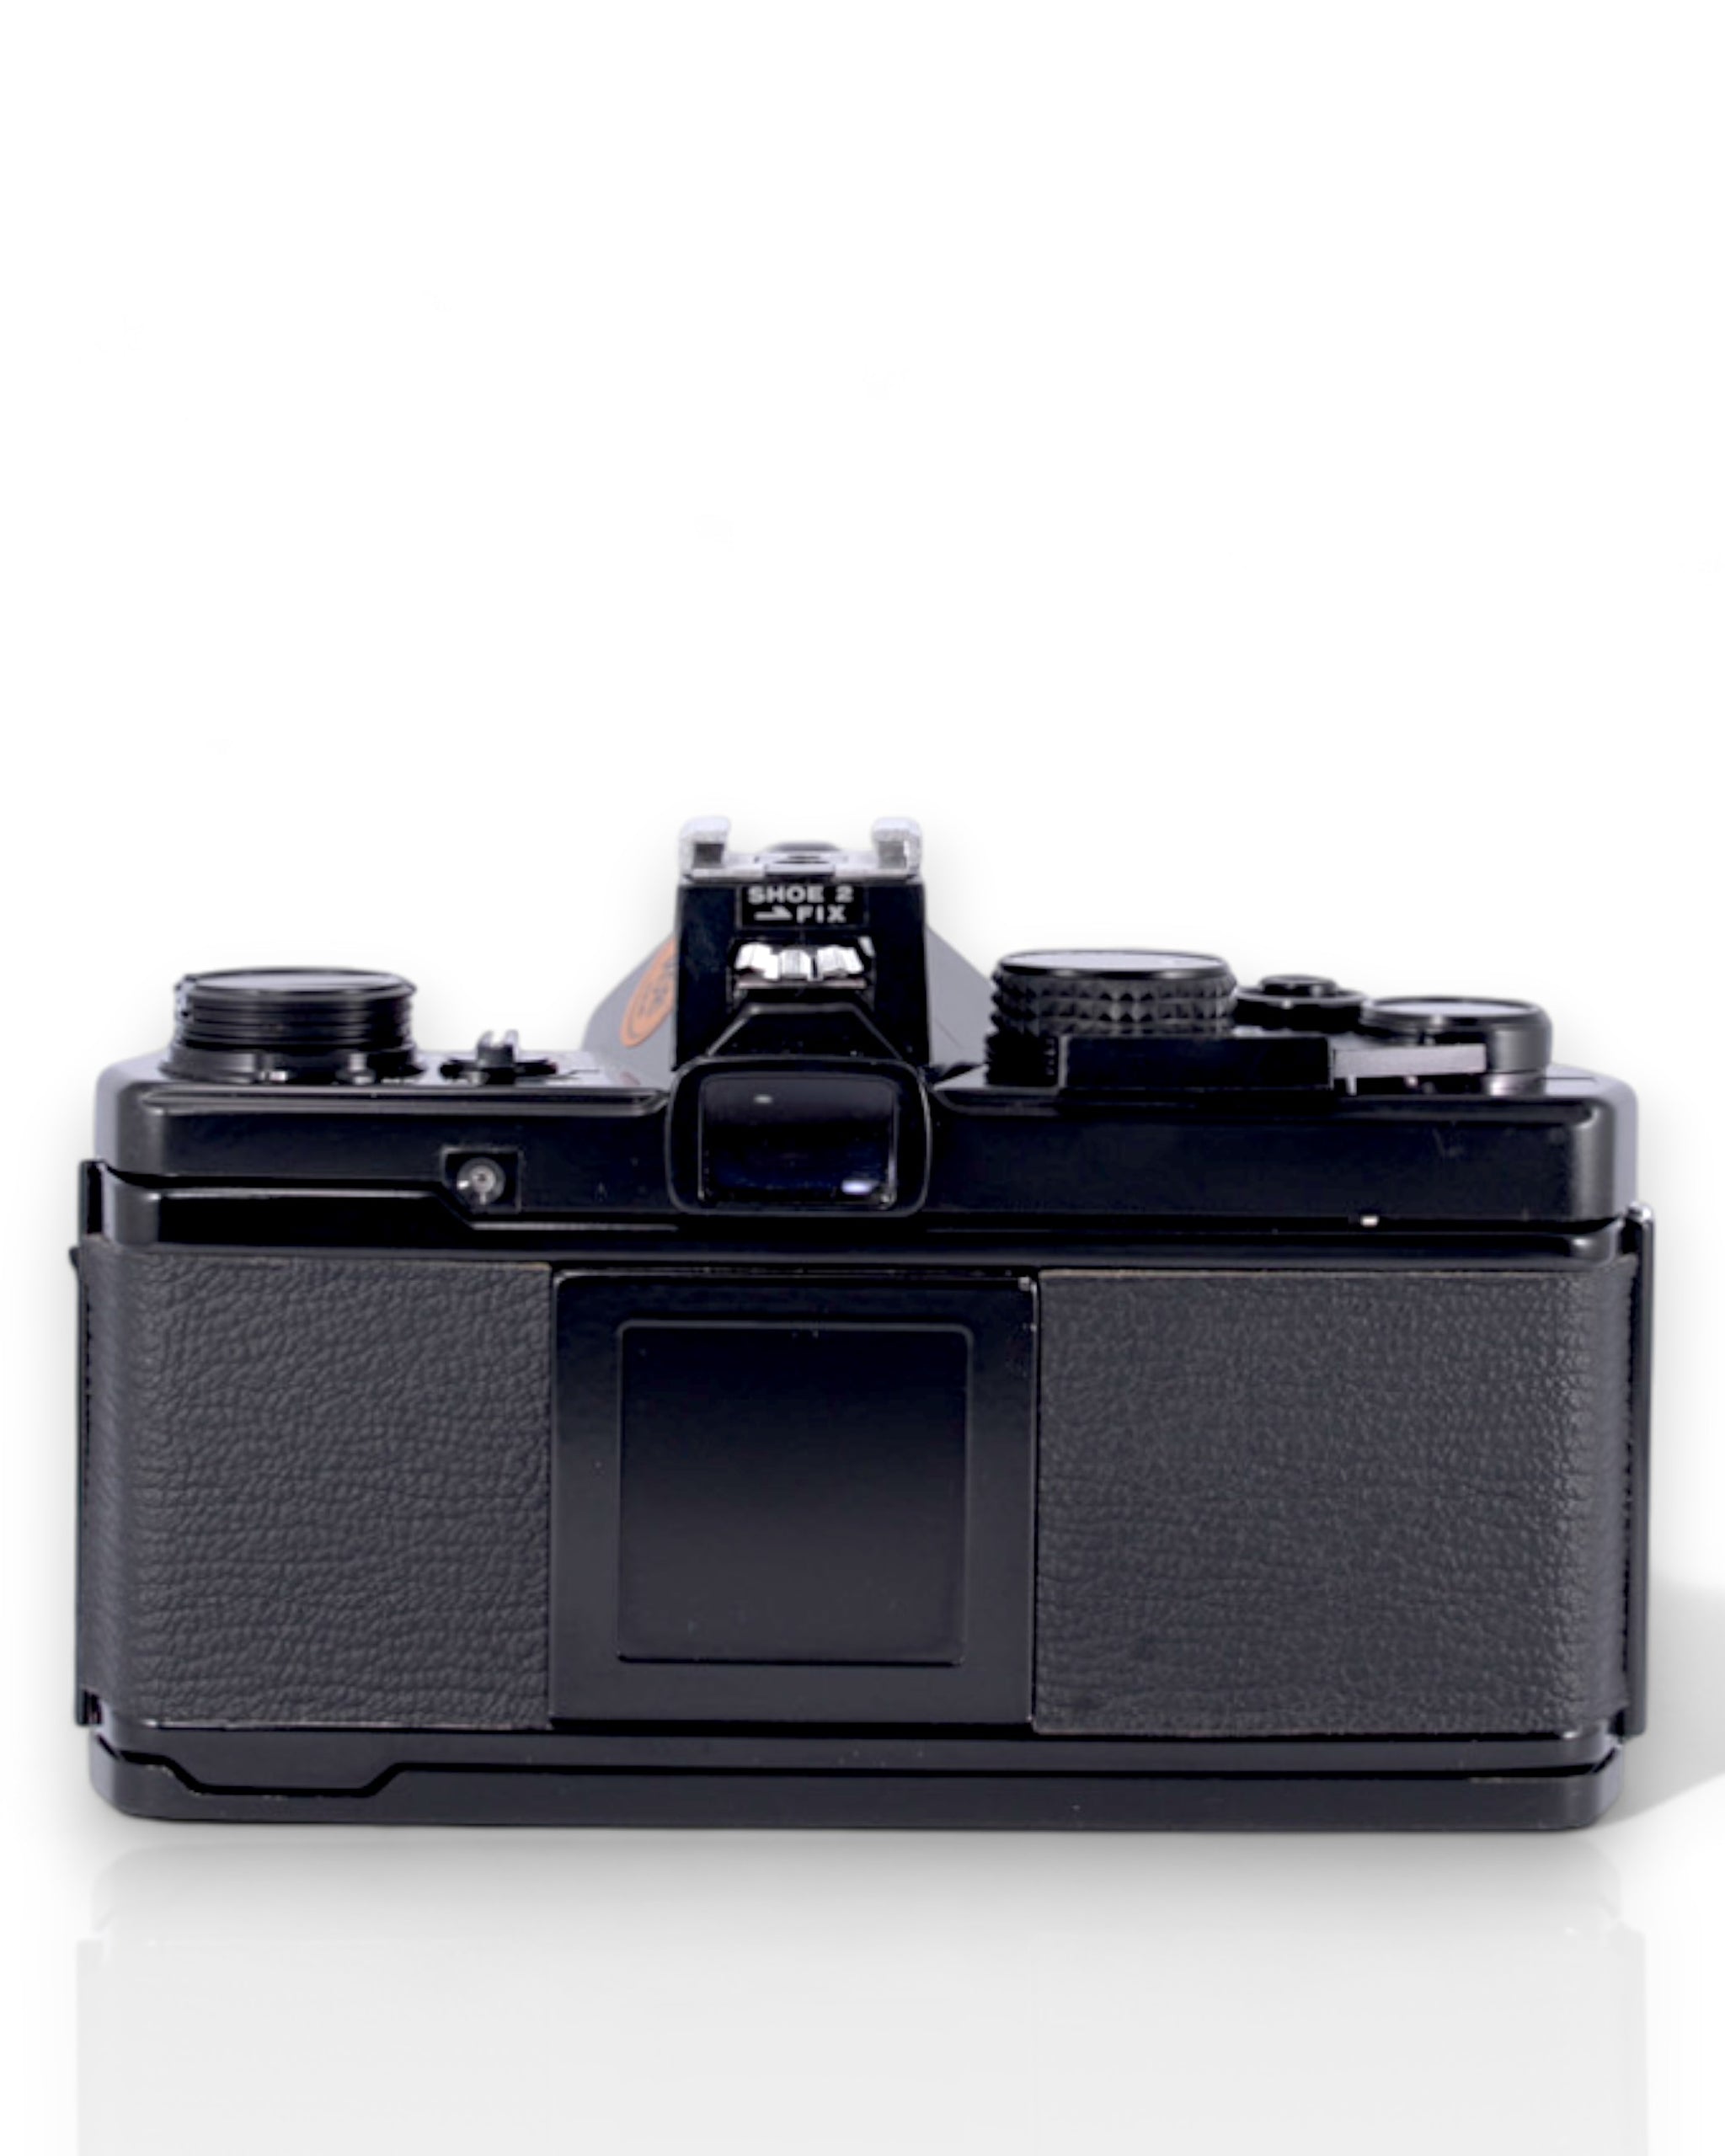 Olympus OM-2 35mm SLR Film Camera with 28mm f3.5 Lens - Mori Film Lab